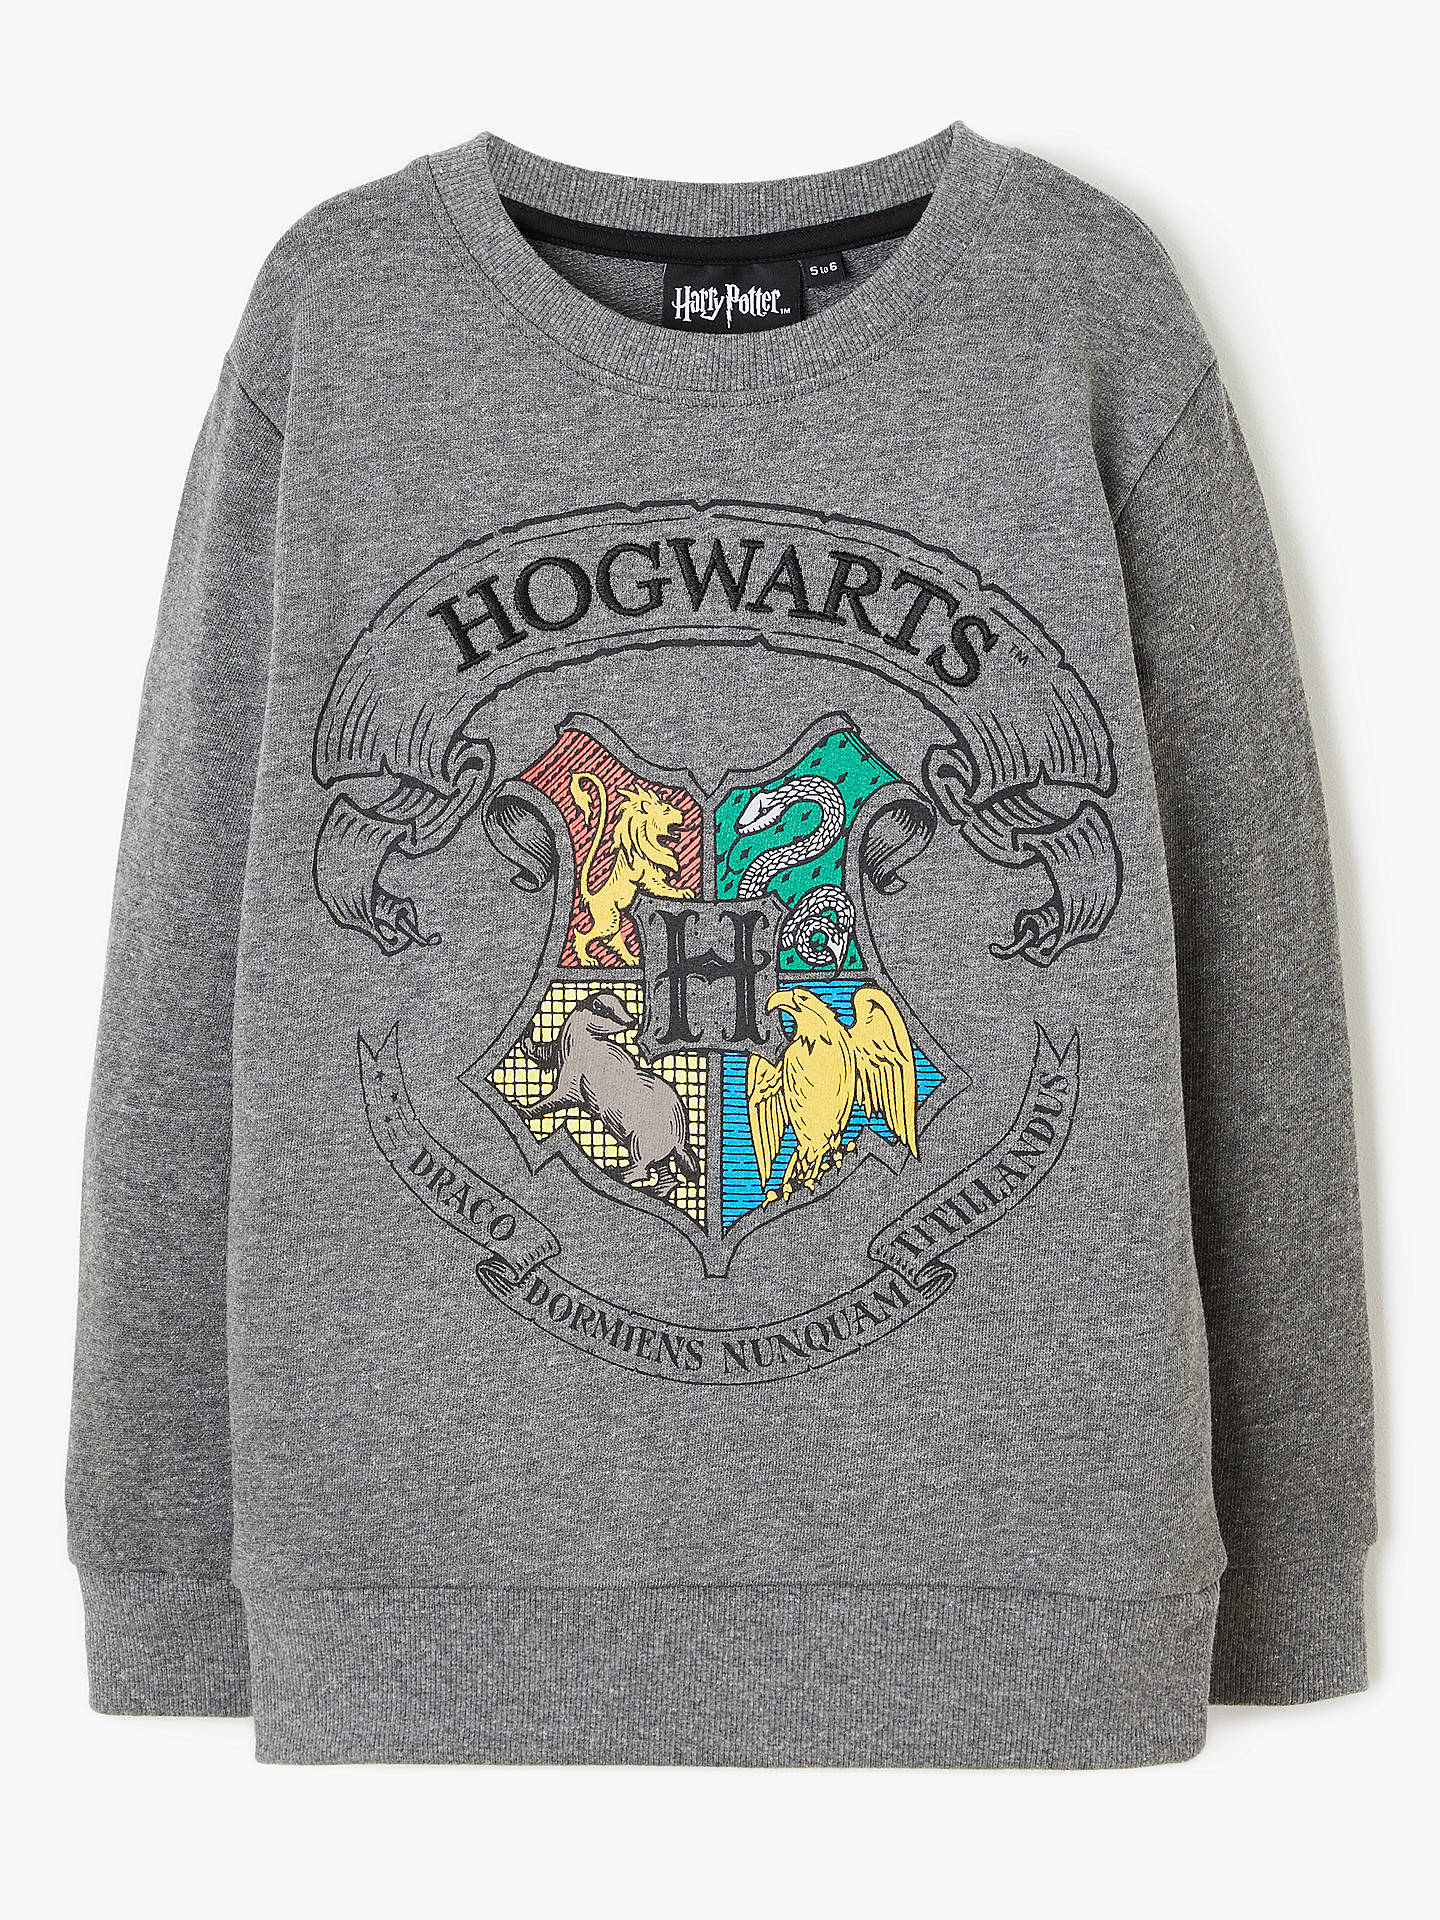 Harry Potter Hogwarts Cotton Sweatshirt, Grey Marl at John Lewis & Partners